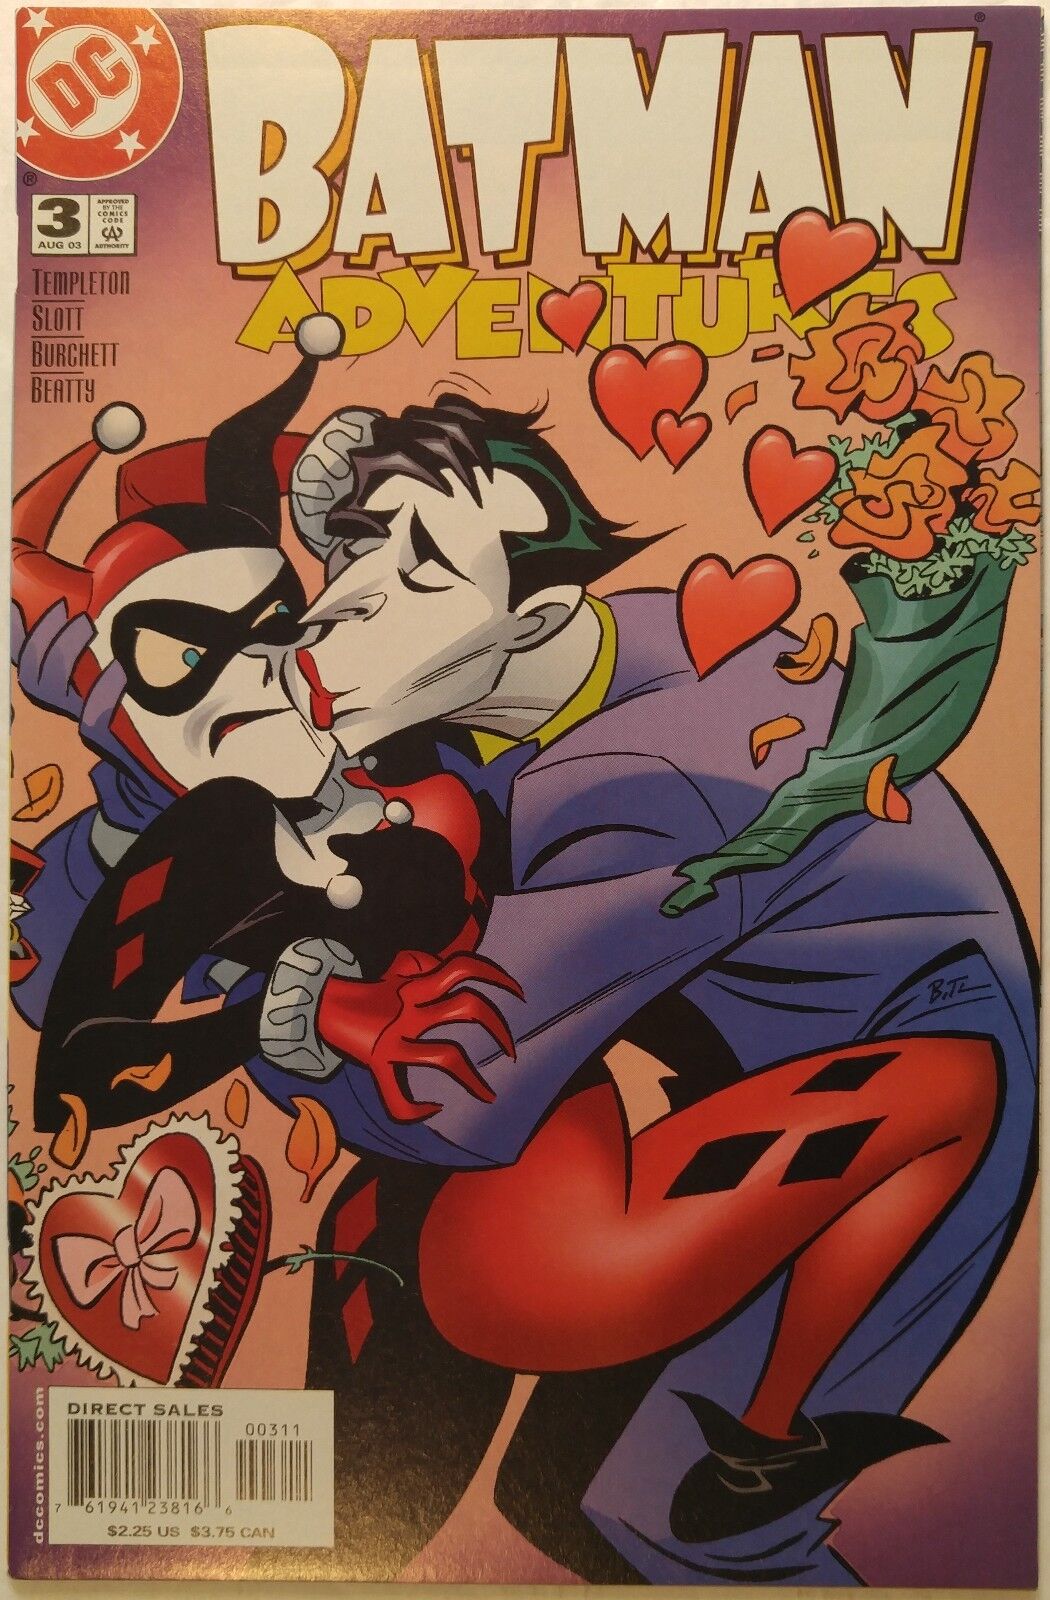 BATMAN ADVENTURES #3 [Second series; Harley Quinn; Ty Templeton & Rick Burchett]